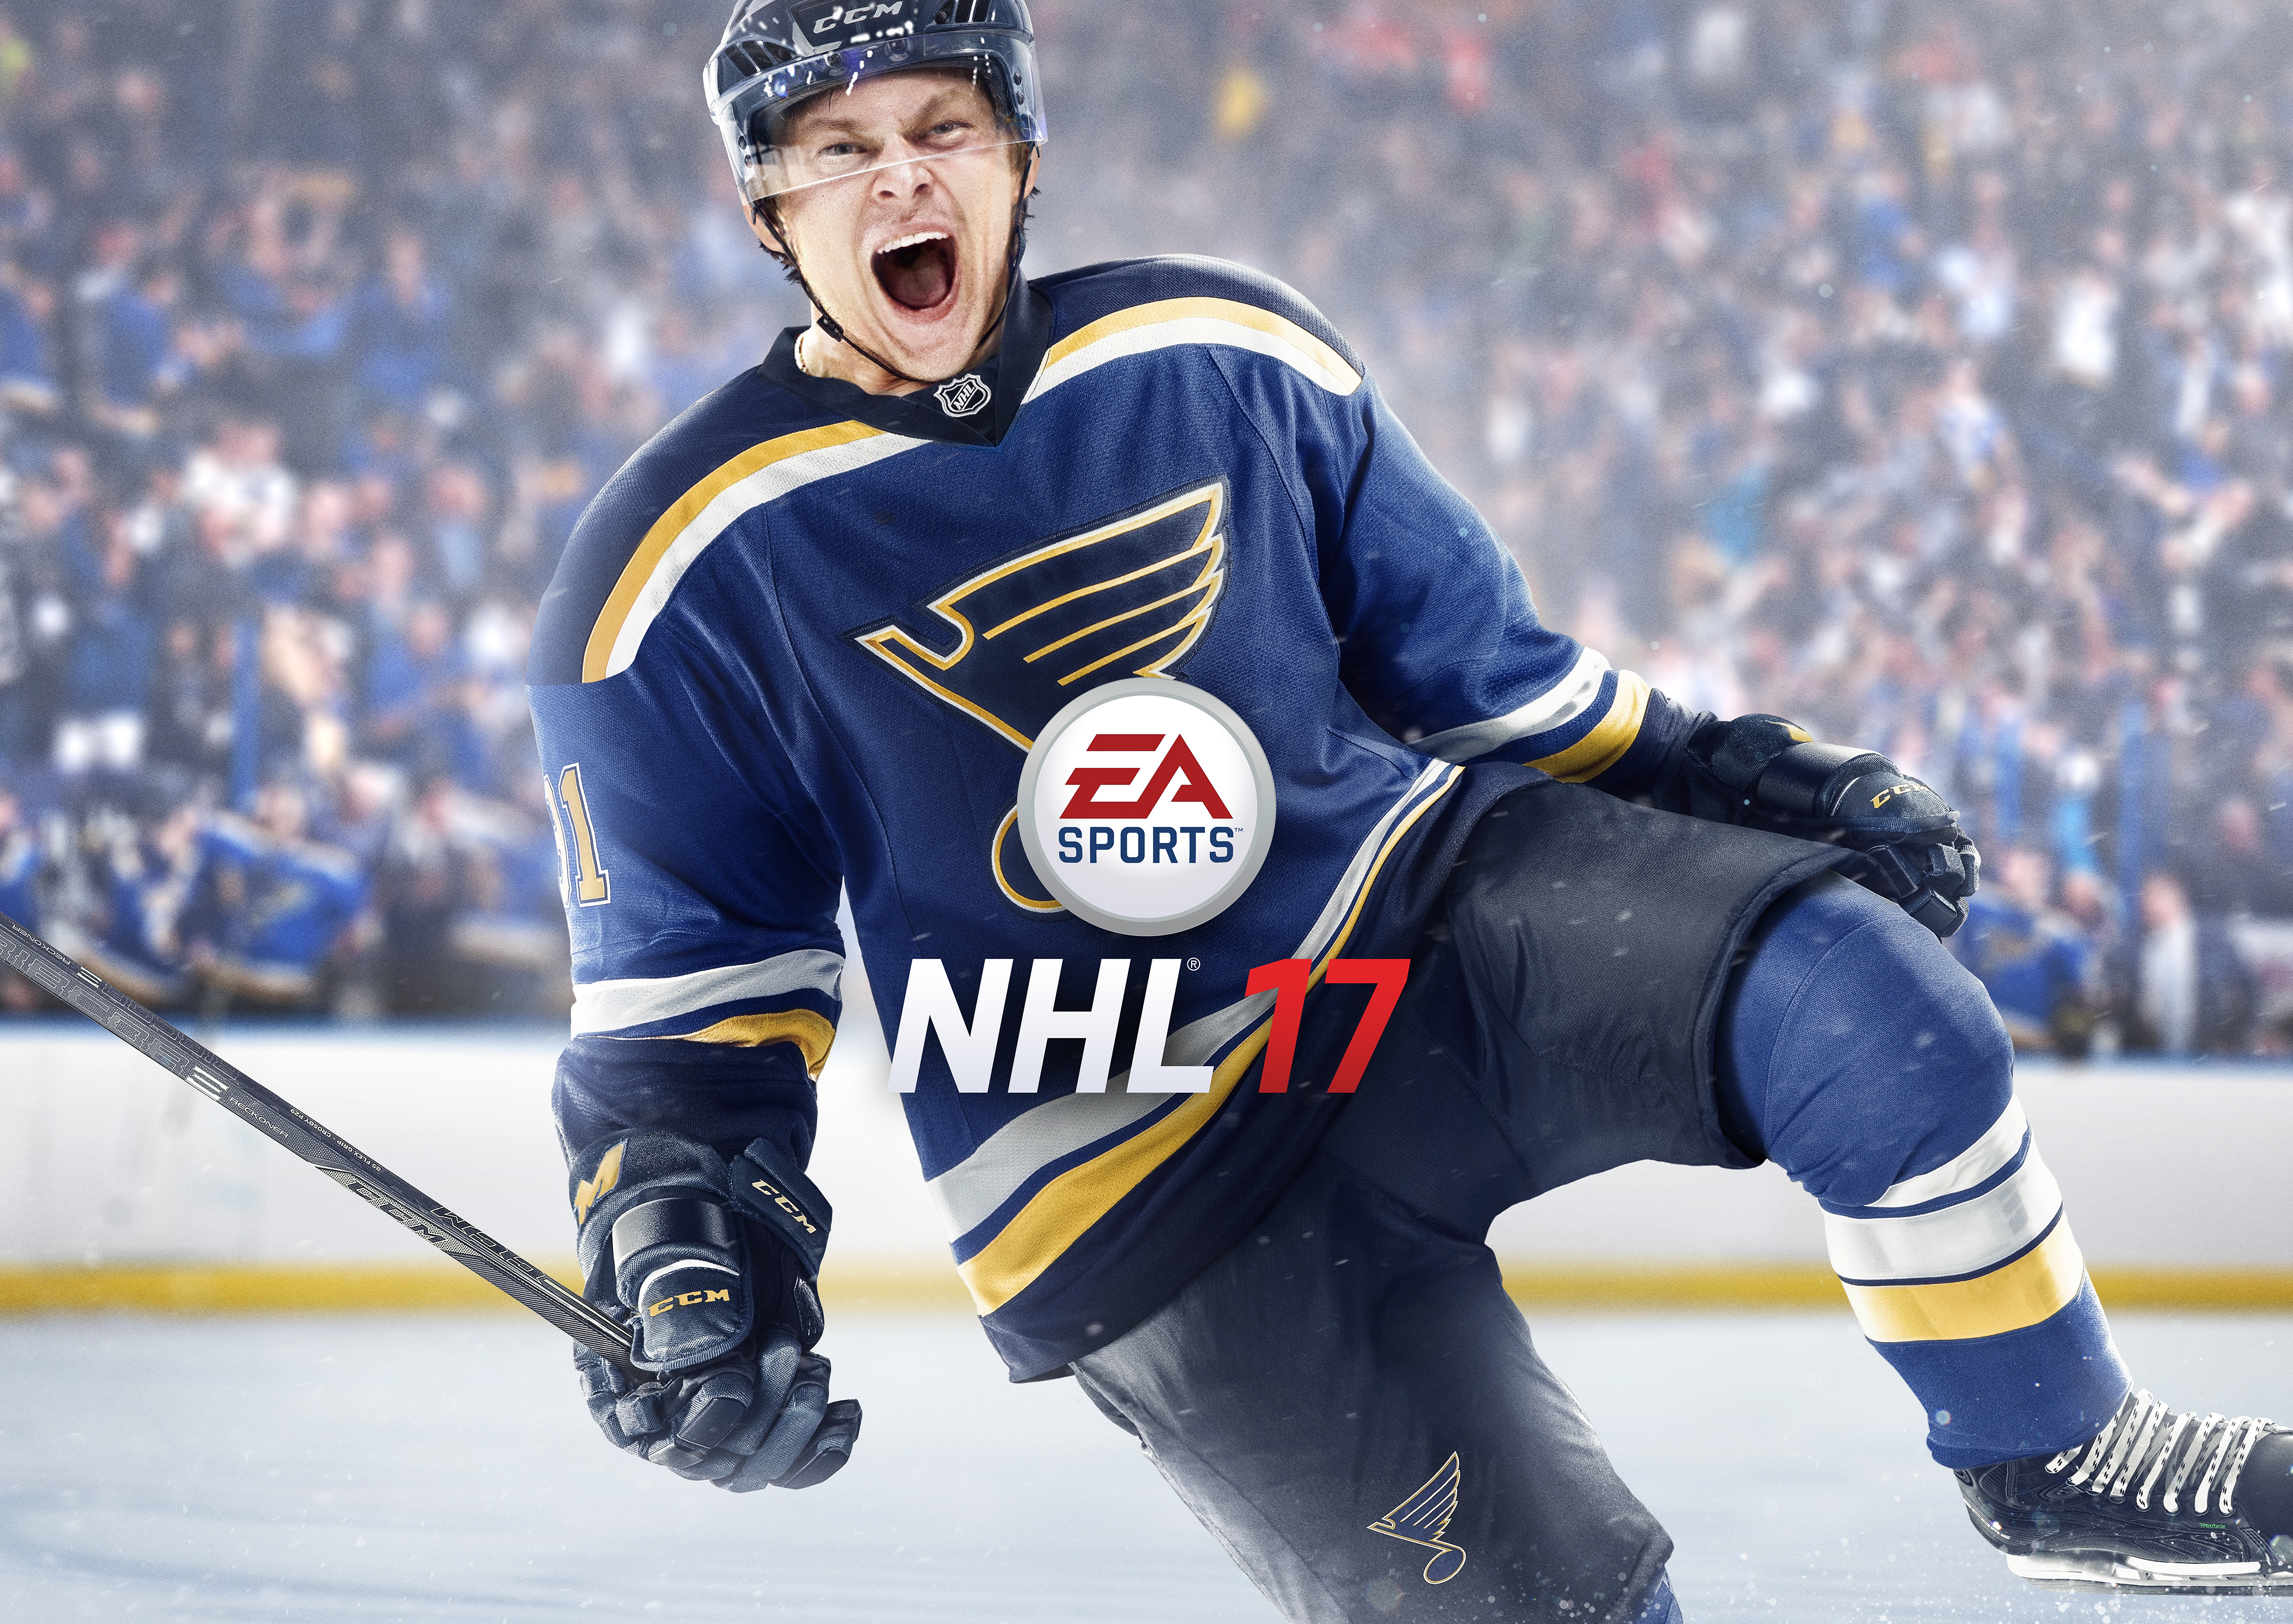 EA SPORTS NHL® 17: St. Louis Blues Forward Vladimir Tarasenko